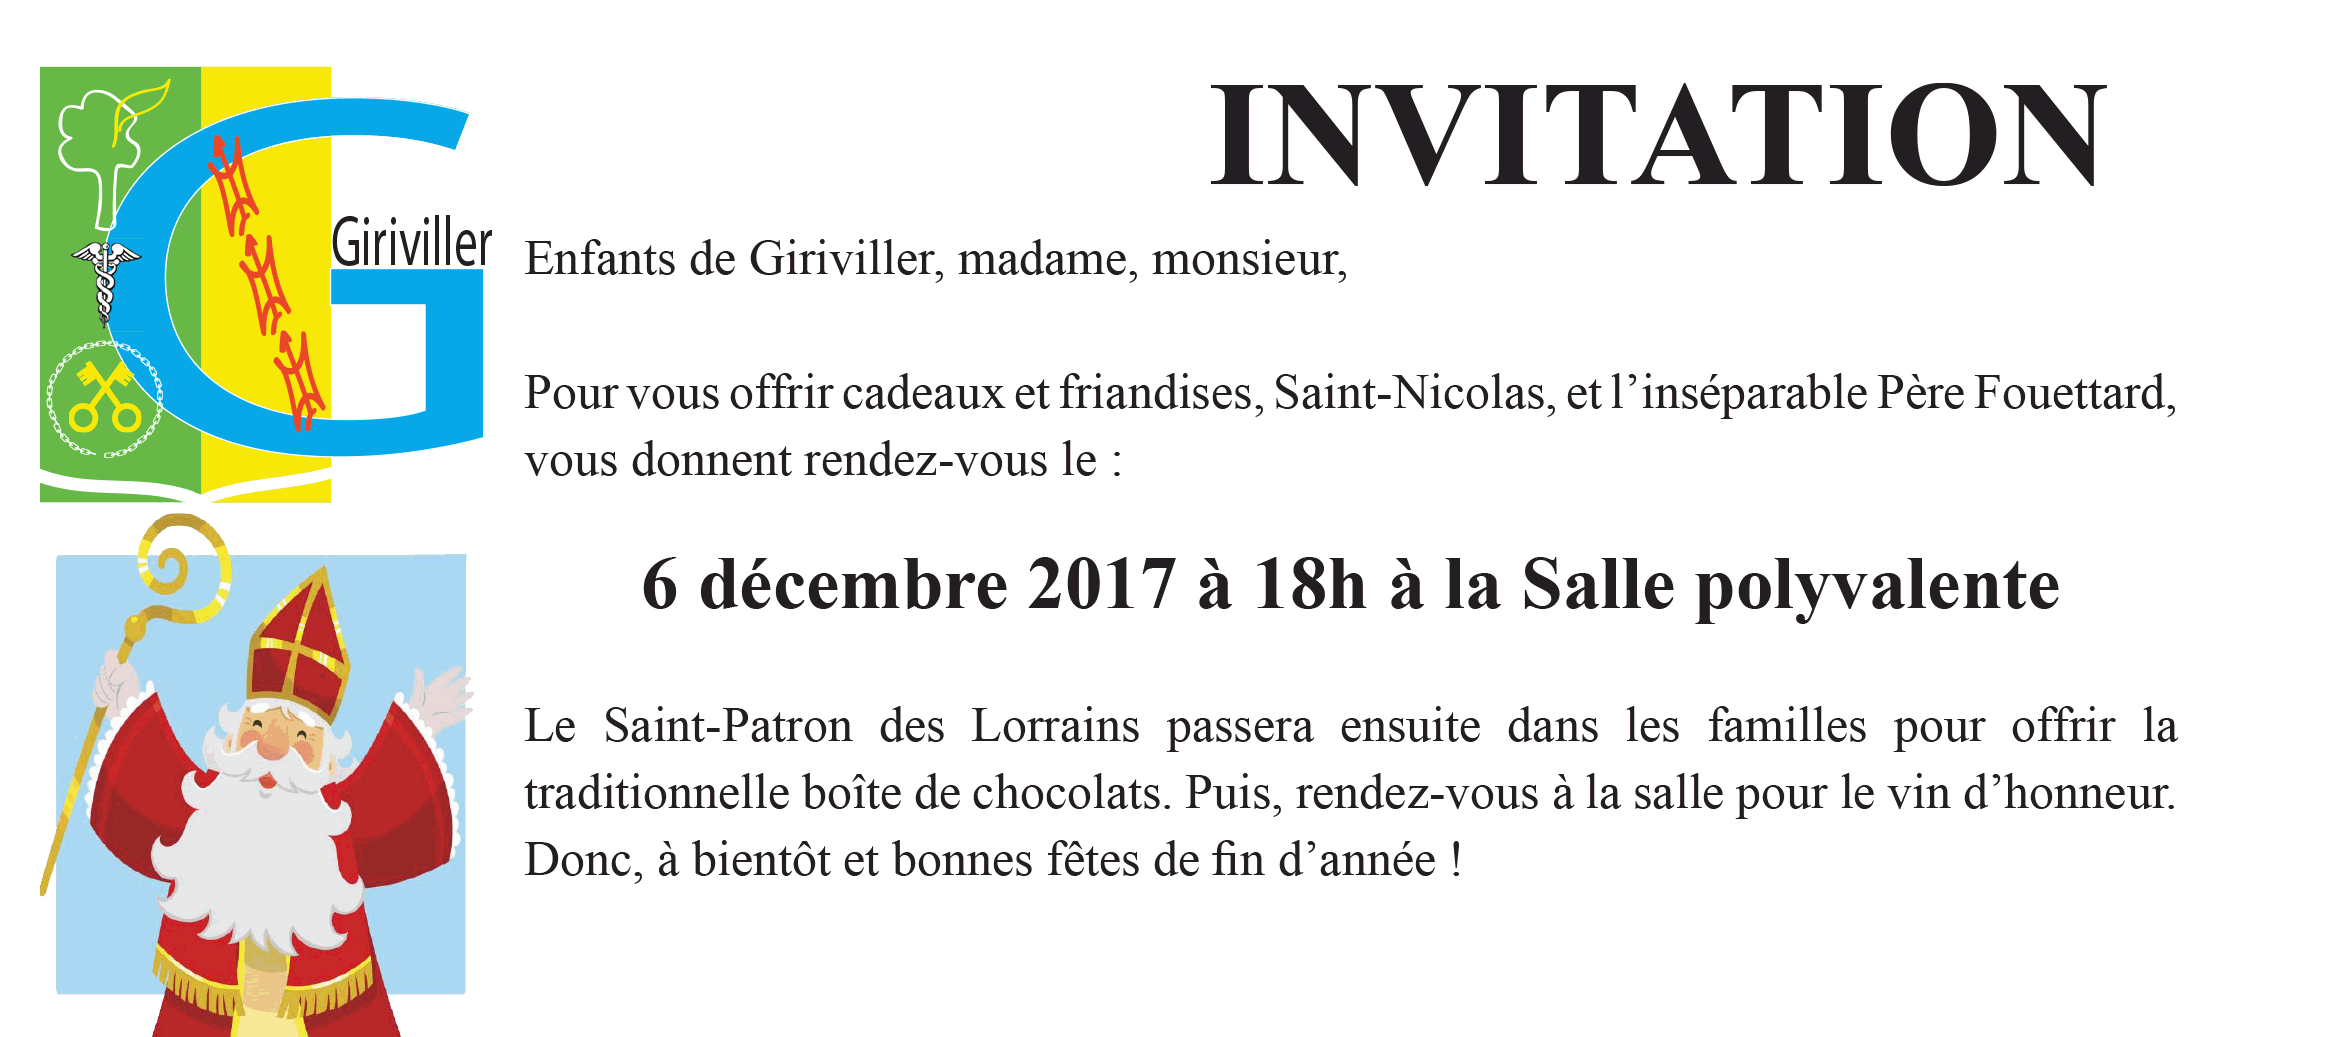 St Nicolas invitation 2017 1111.gif